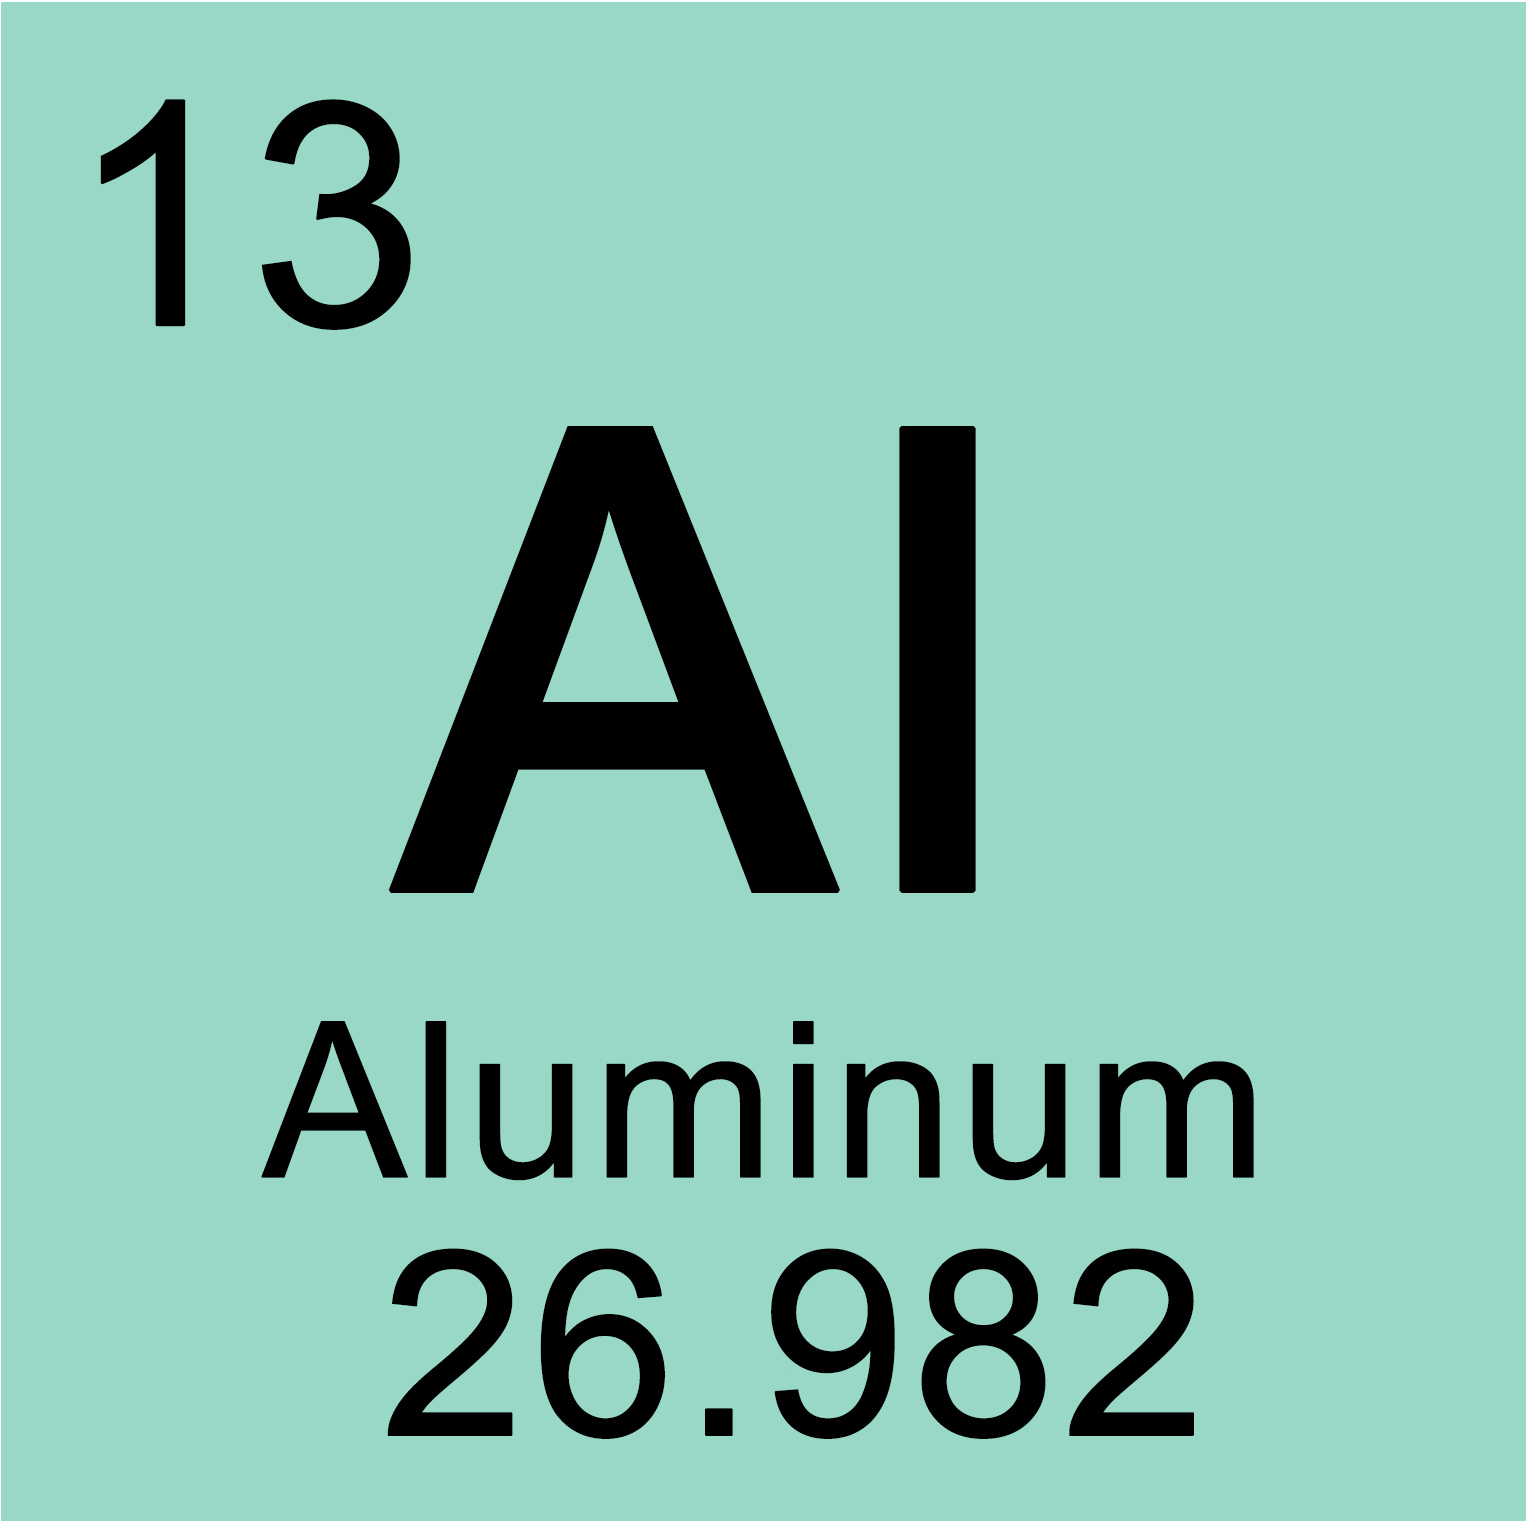 Aluminum element research paper